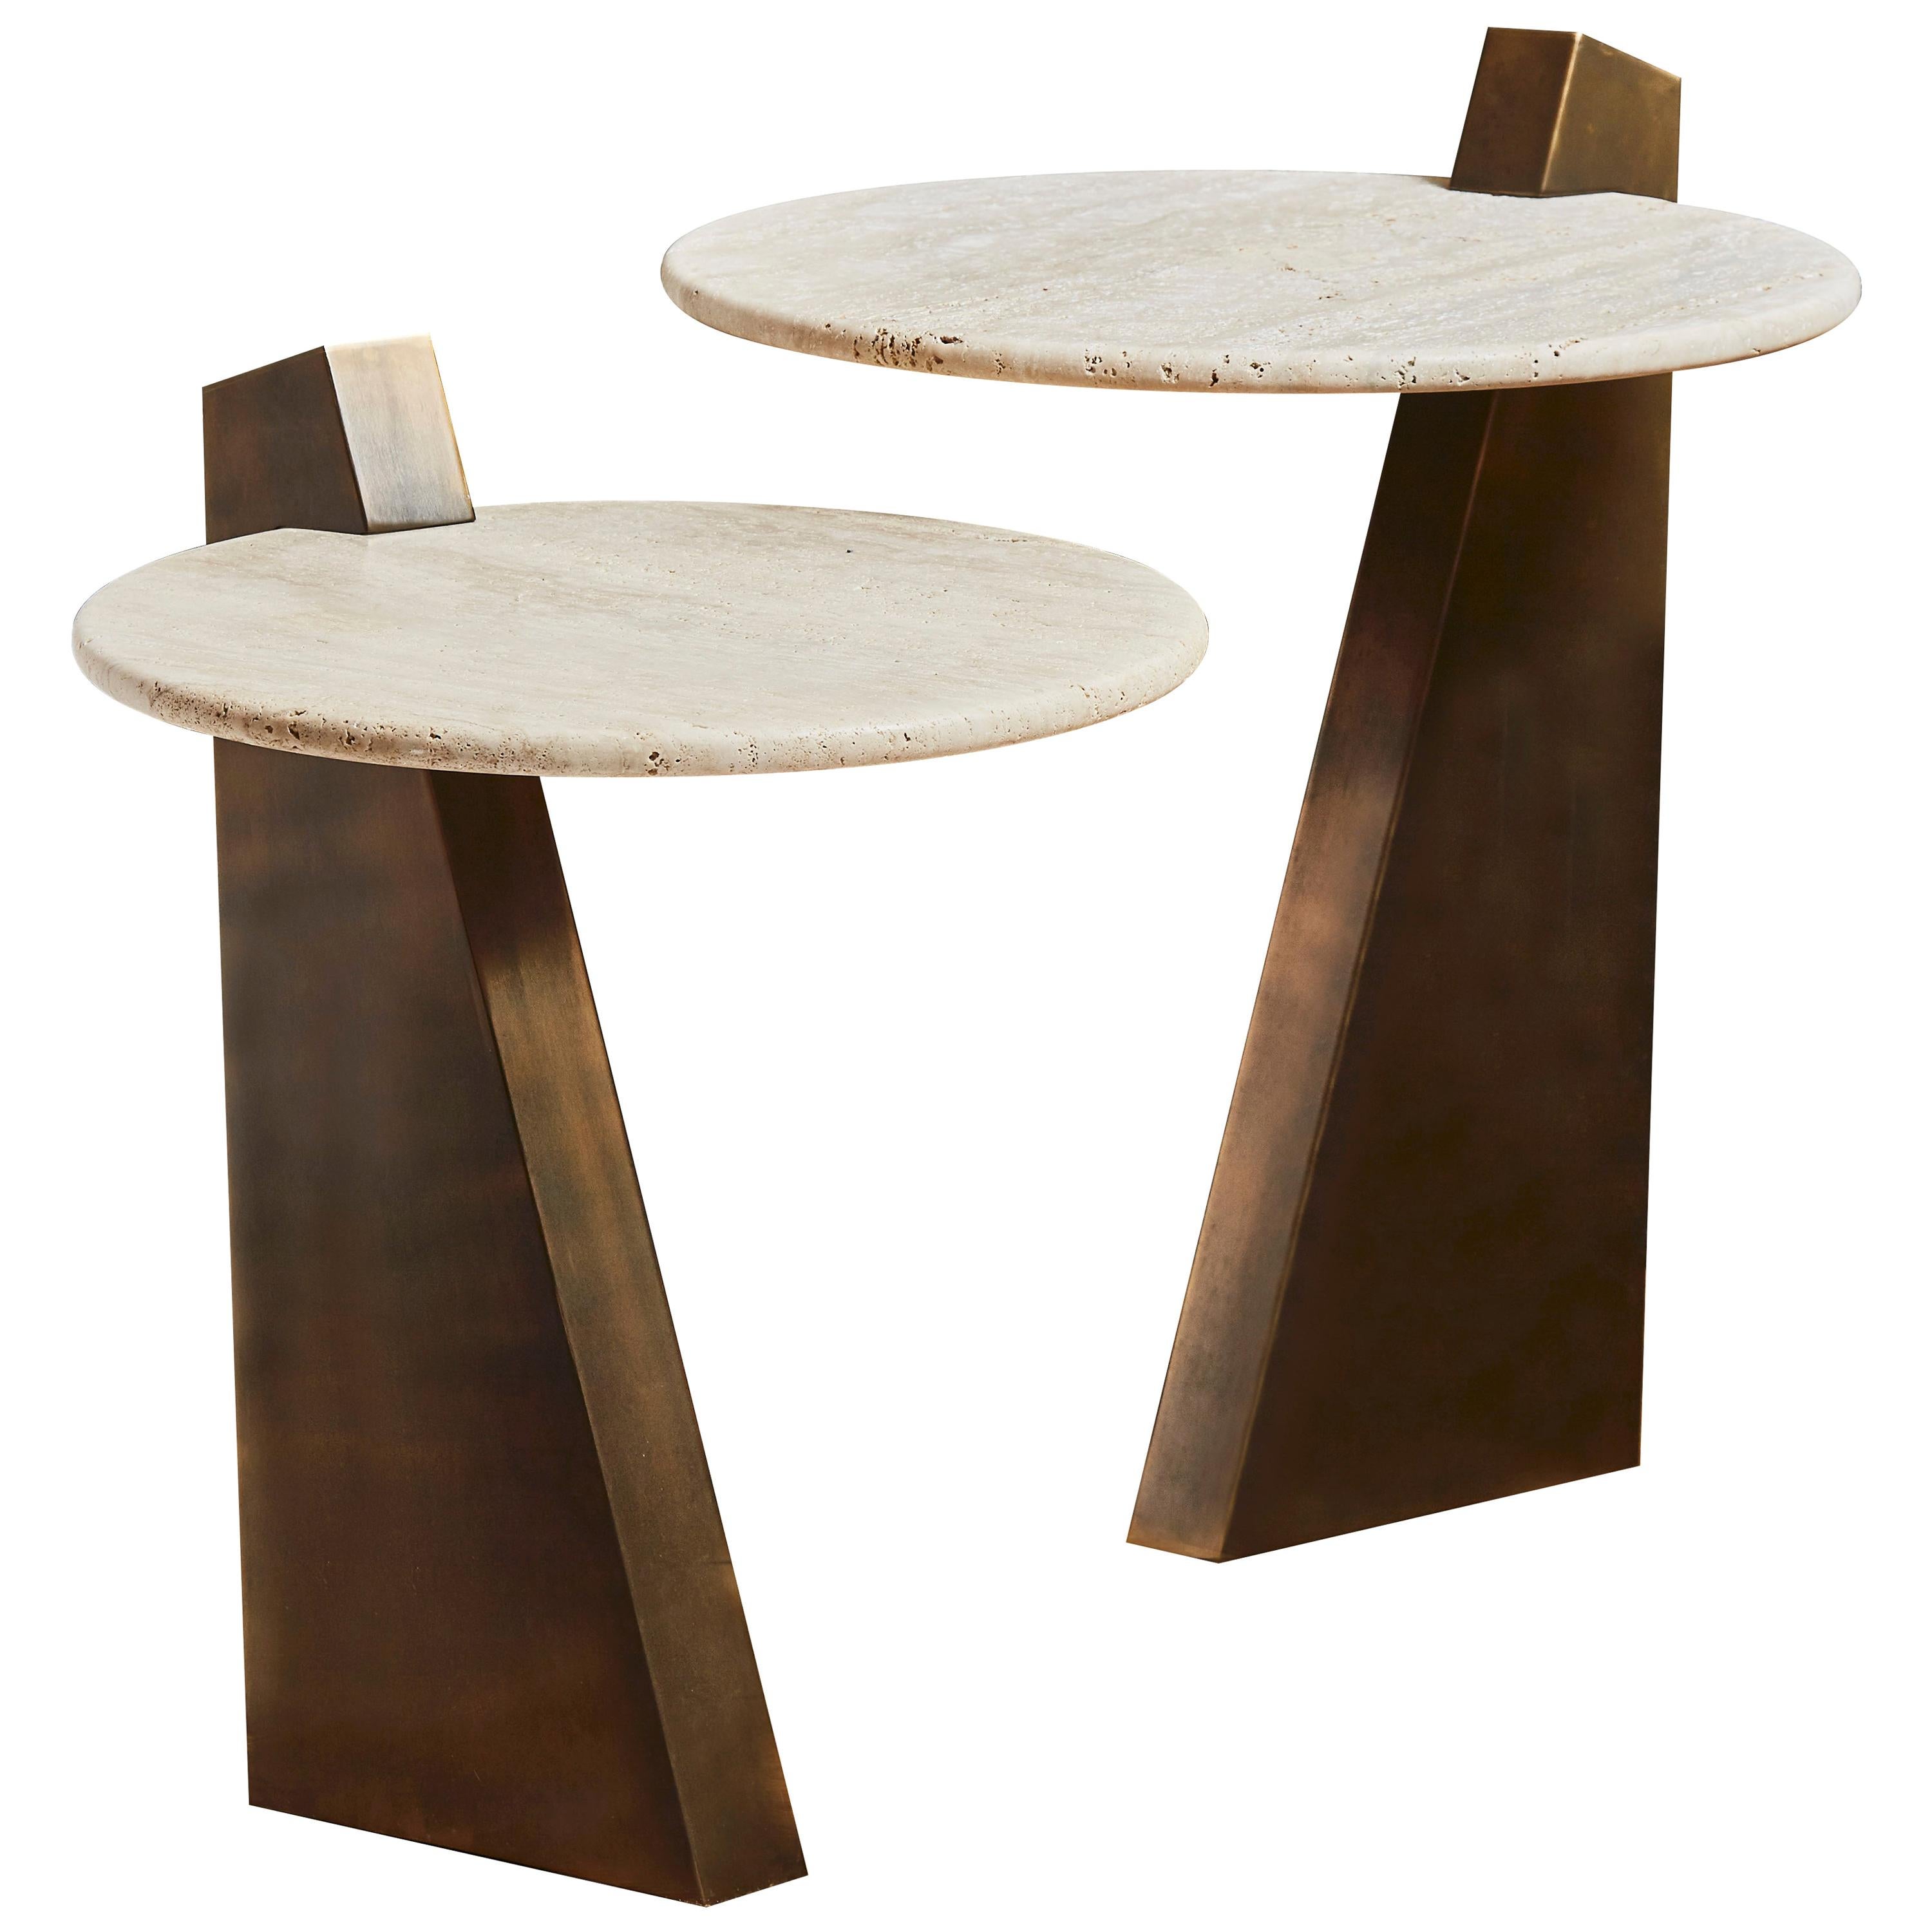 Pair of Pedestal Table in Travertine by Studio Glustin